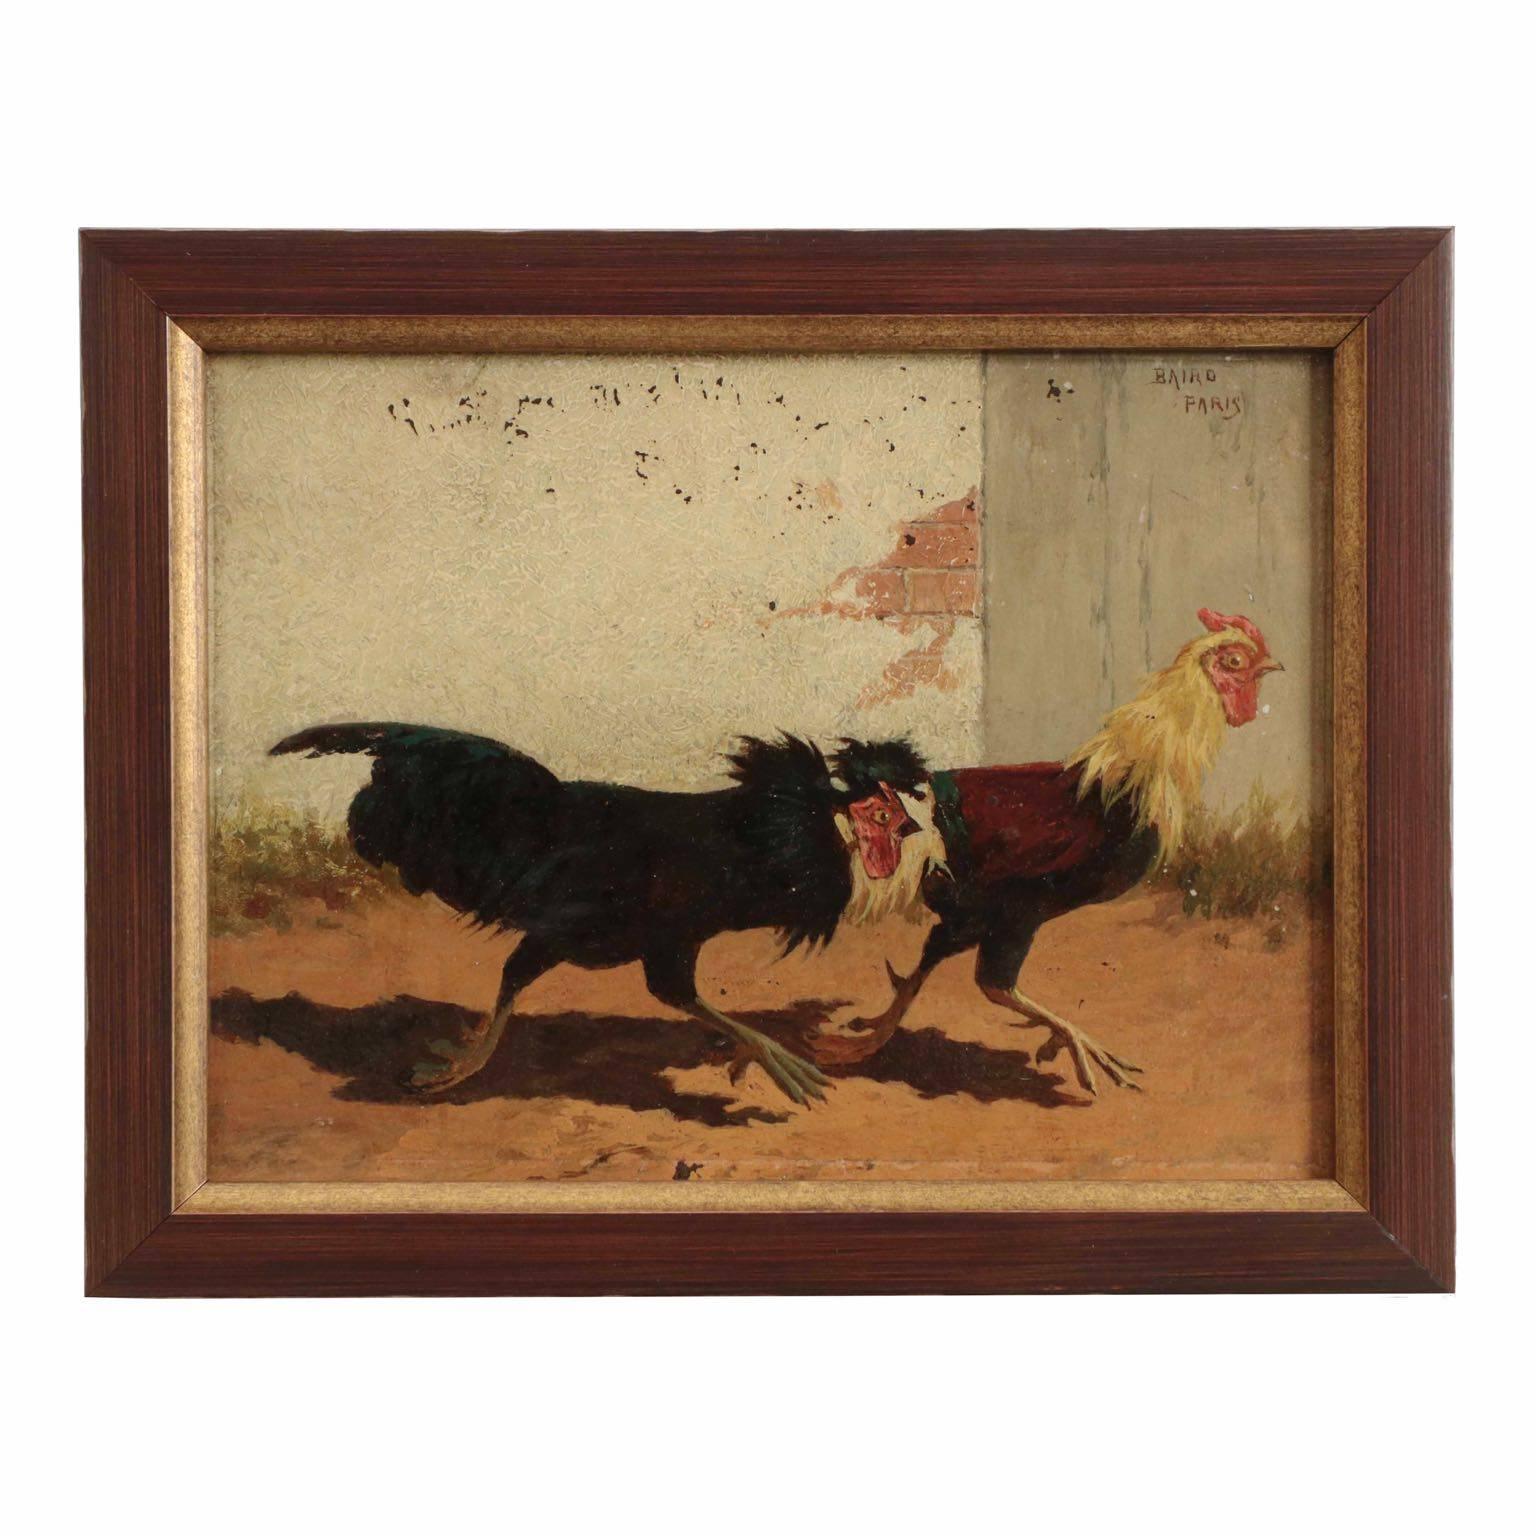 Barbizon School Four William Baird American, 1847-1899 Paintings of Cocks Fighting